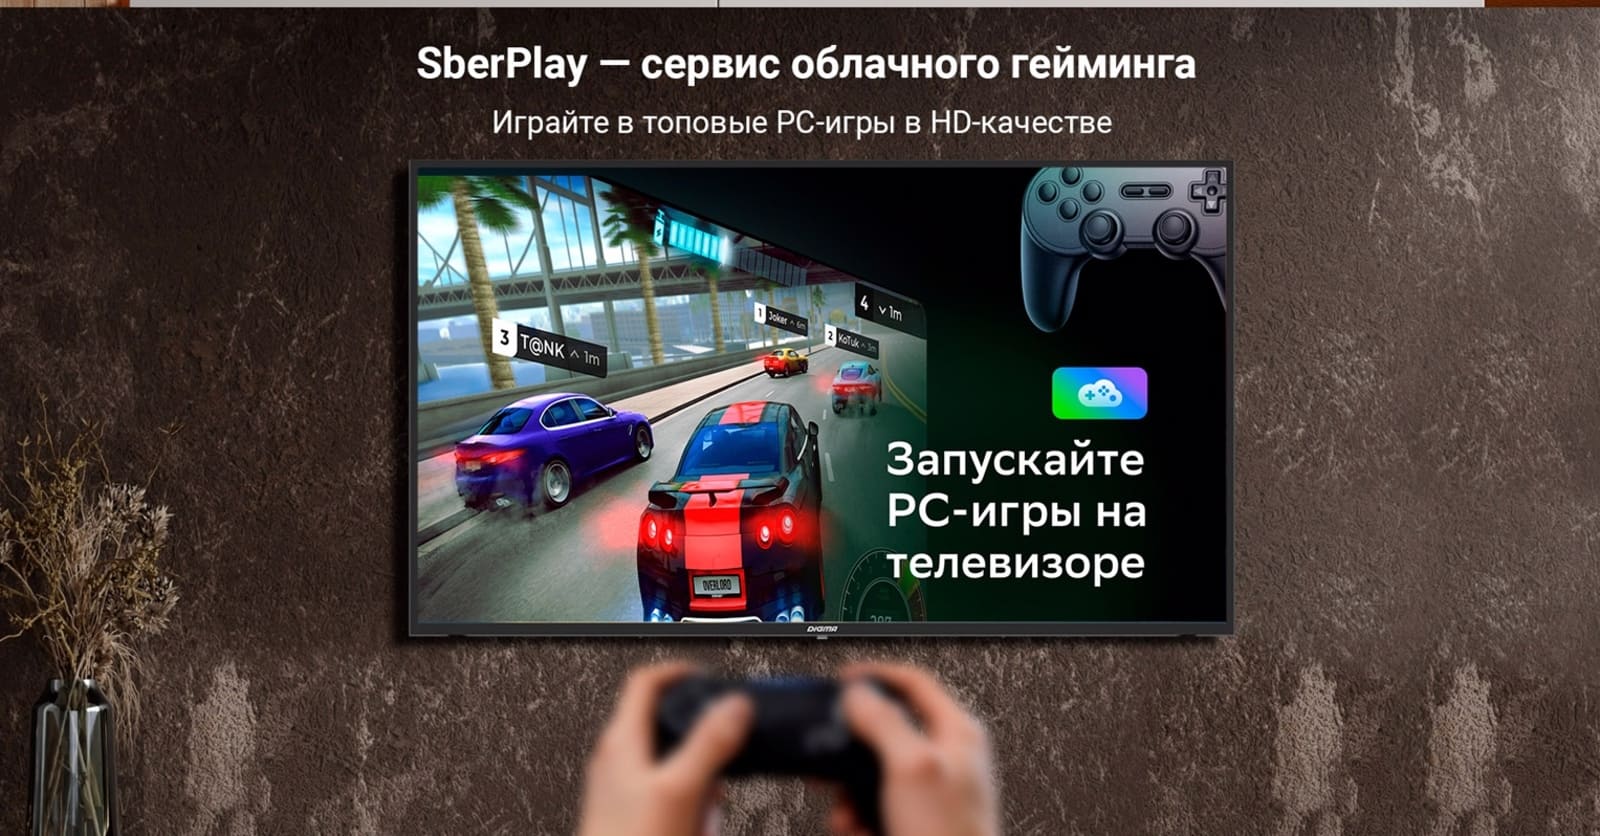 SberPlay - сервис облачного гейминга